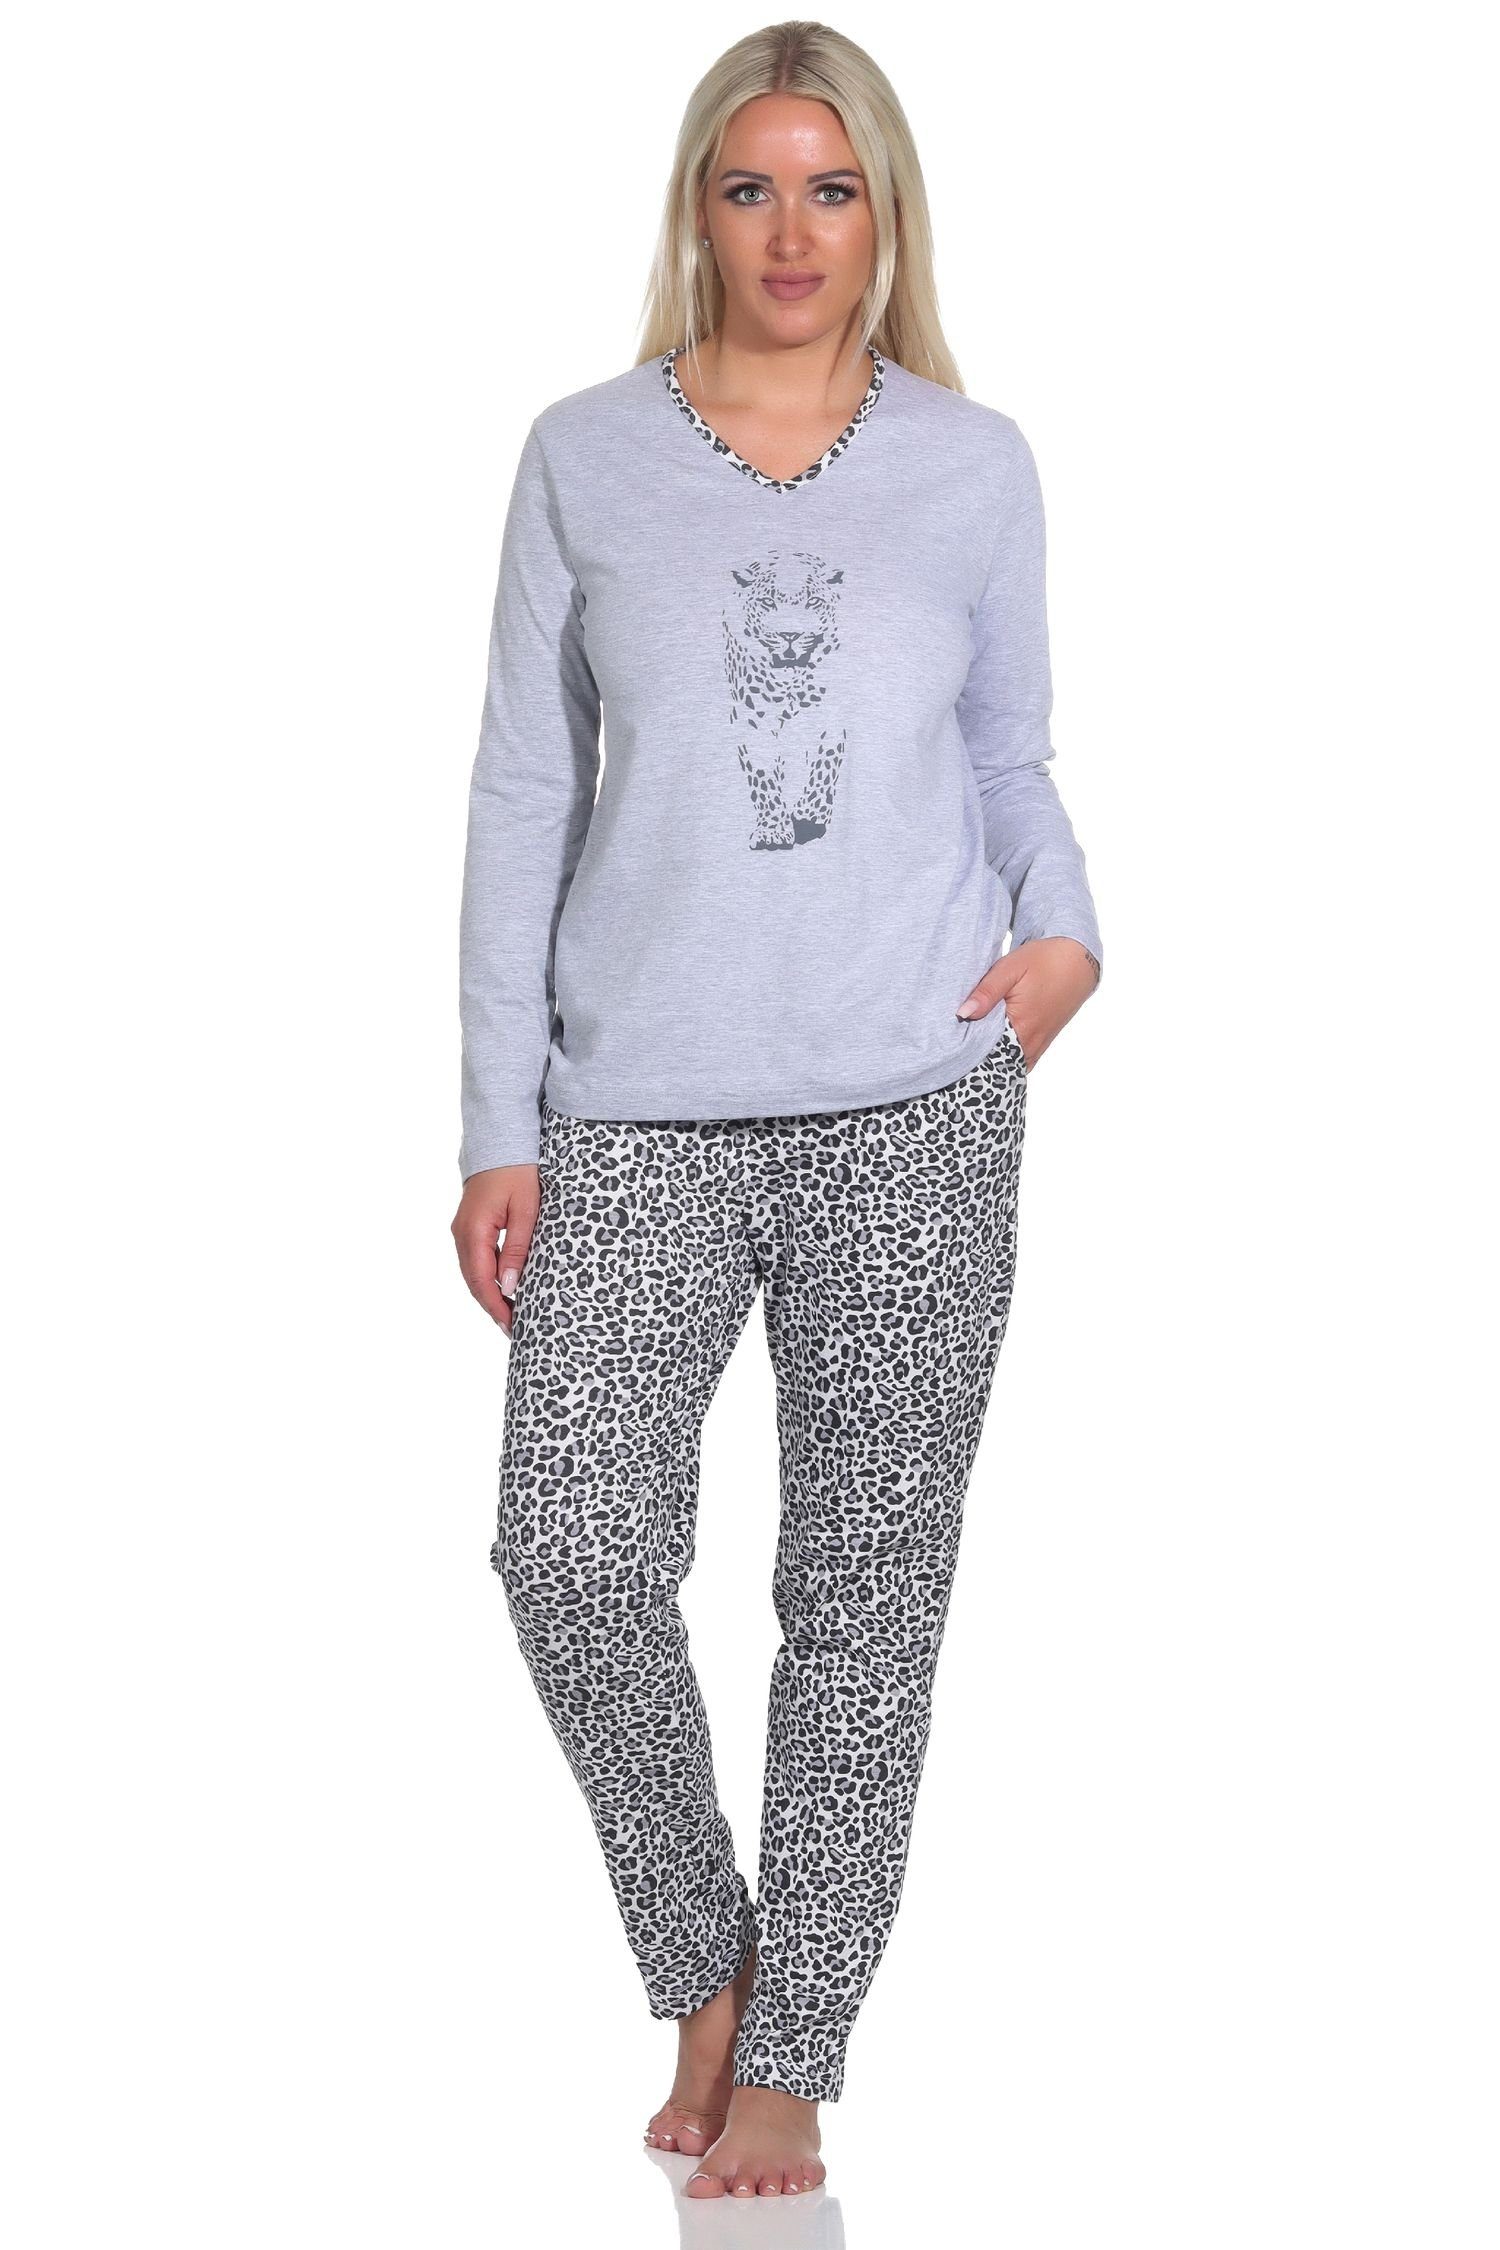 Normann Pyjama Damen Langarm Schlafanzug mit Tiermotiv, Hose im Animal-Print-Look grau-mel.